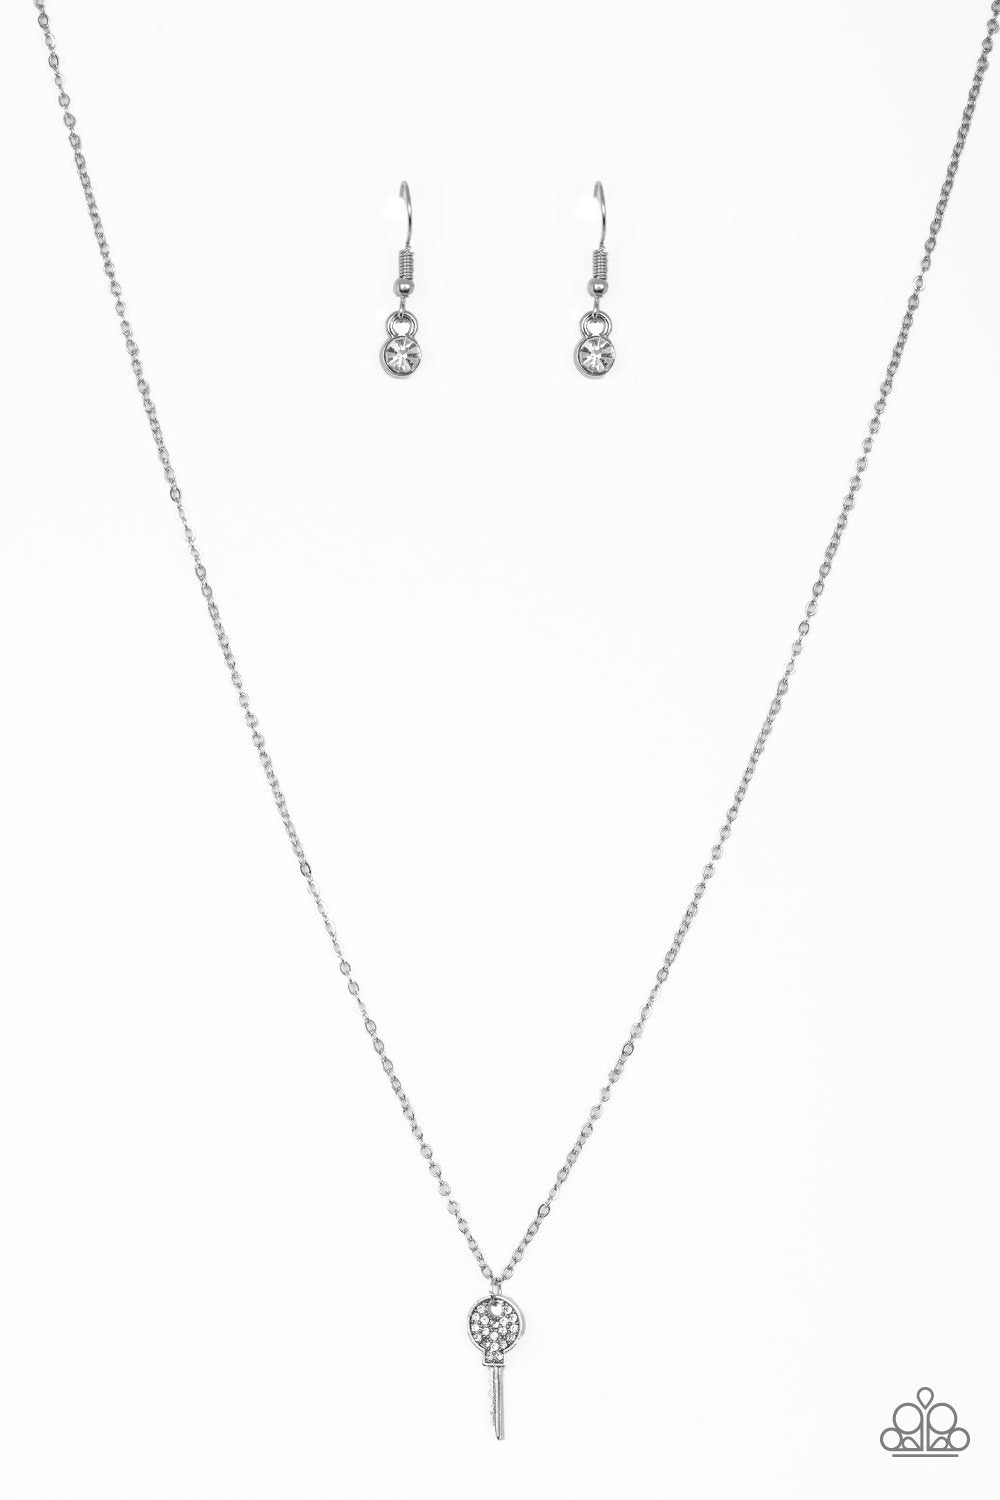 Key Figure Silver and White Rhinestone Key Necklace - Paparazzi Accessories-CarasShop.com - $5 Jewelry by Cara Jewels